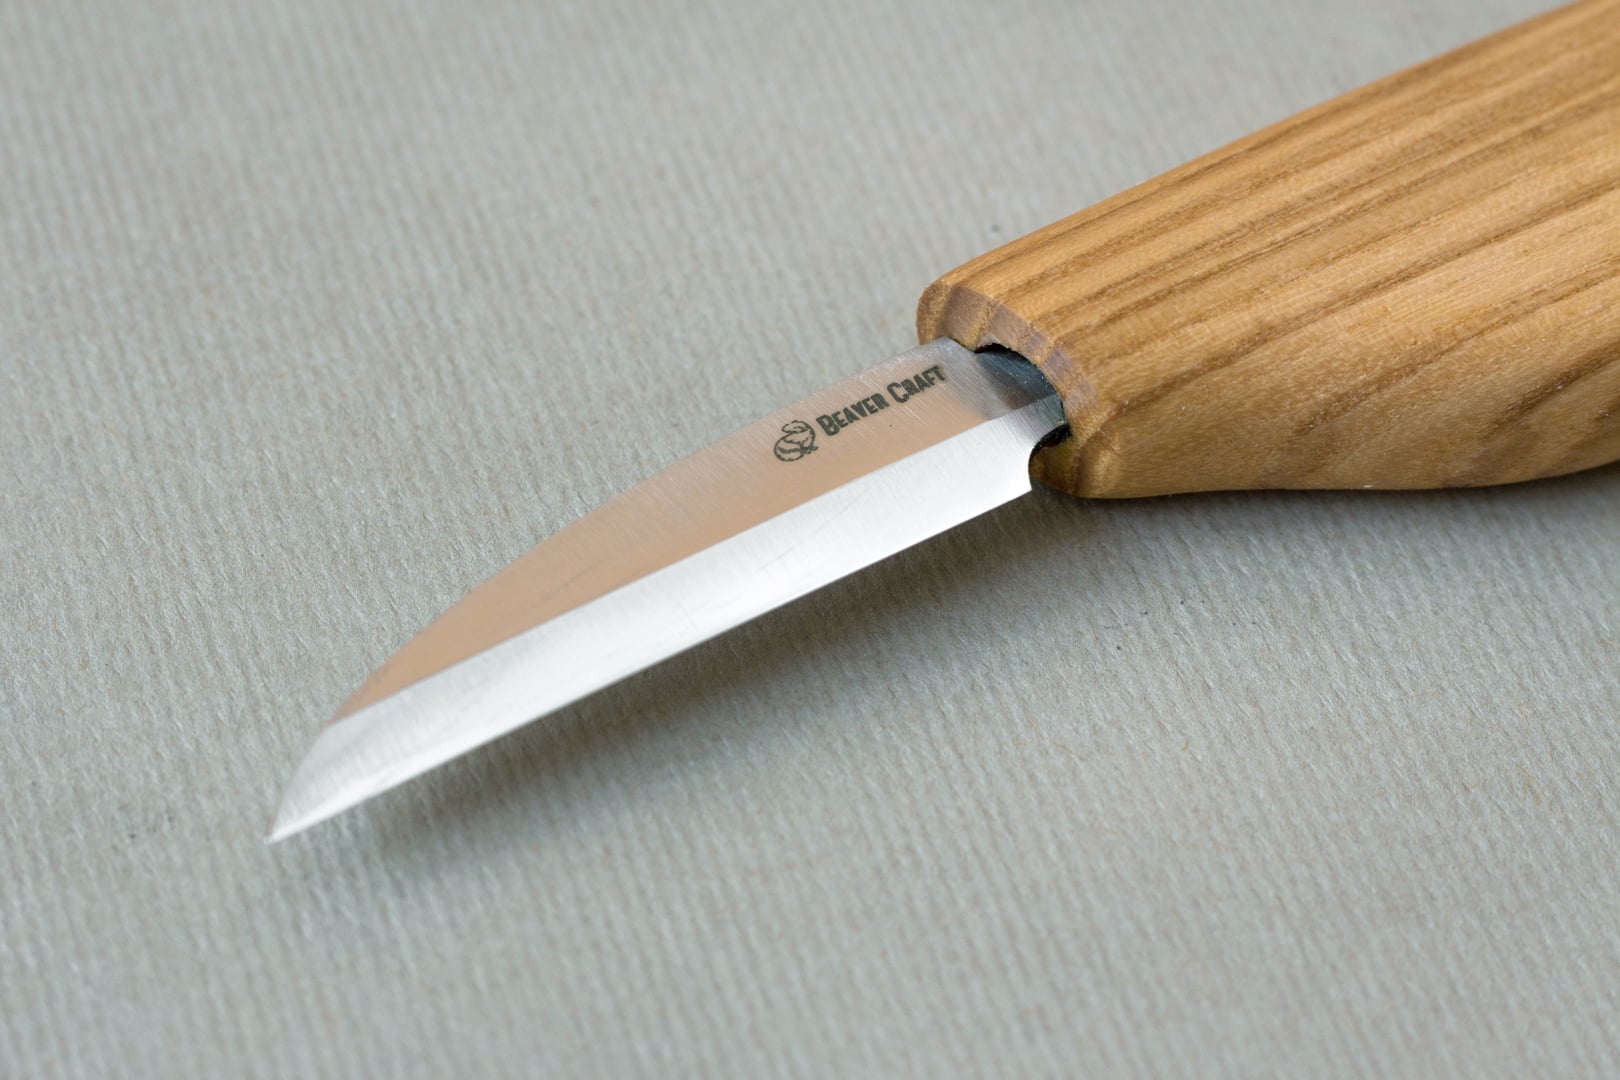 Is Walnut Wood Good for Carving? – BeaverCraft Tools